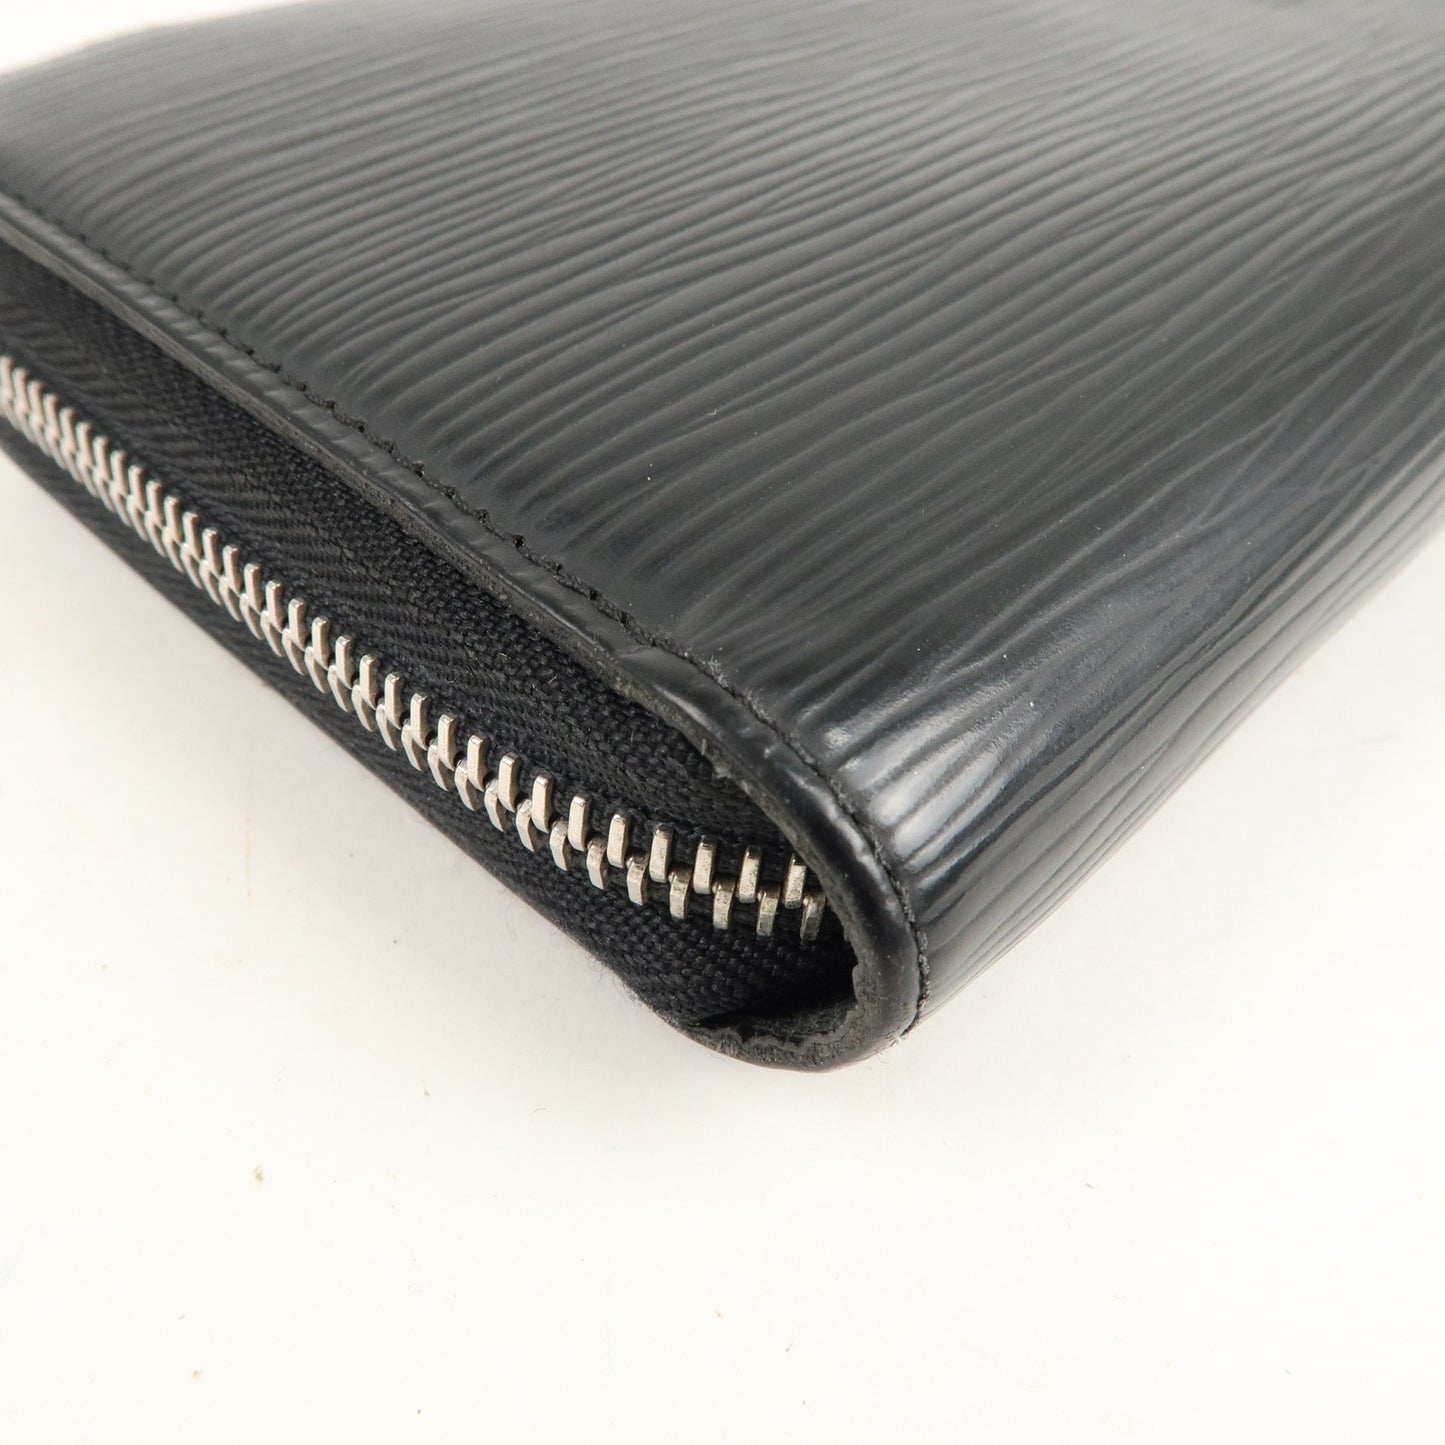 Louis Vuitton Epi Zippy Wallet Zip Round Long Wallet Black M60072